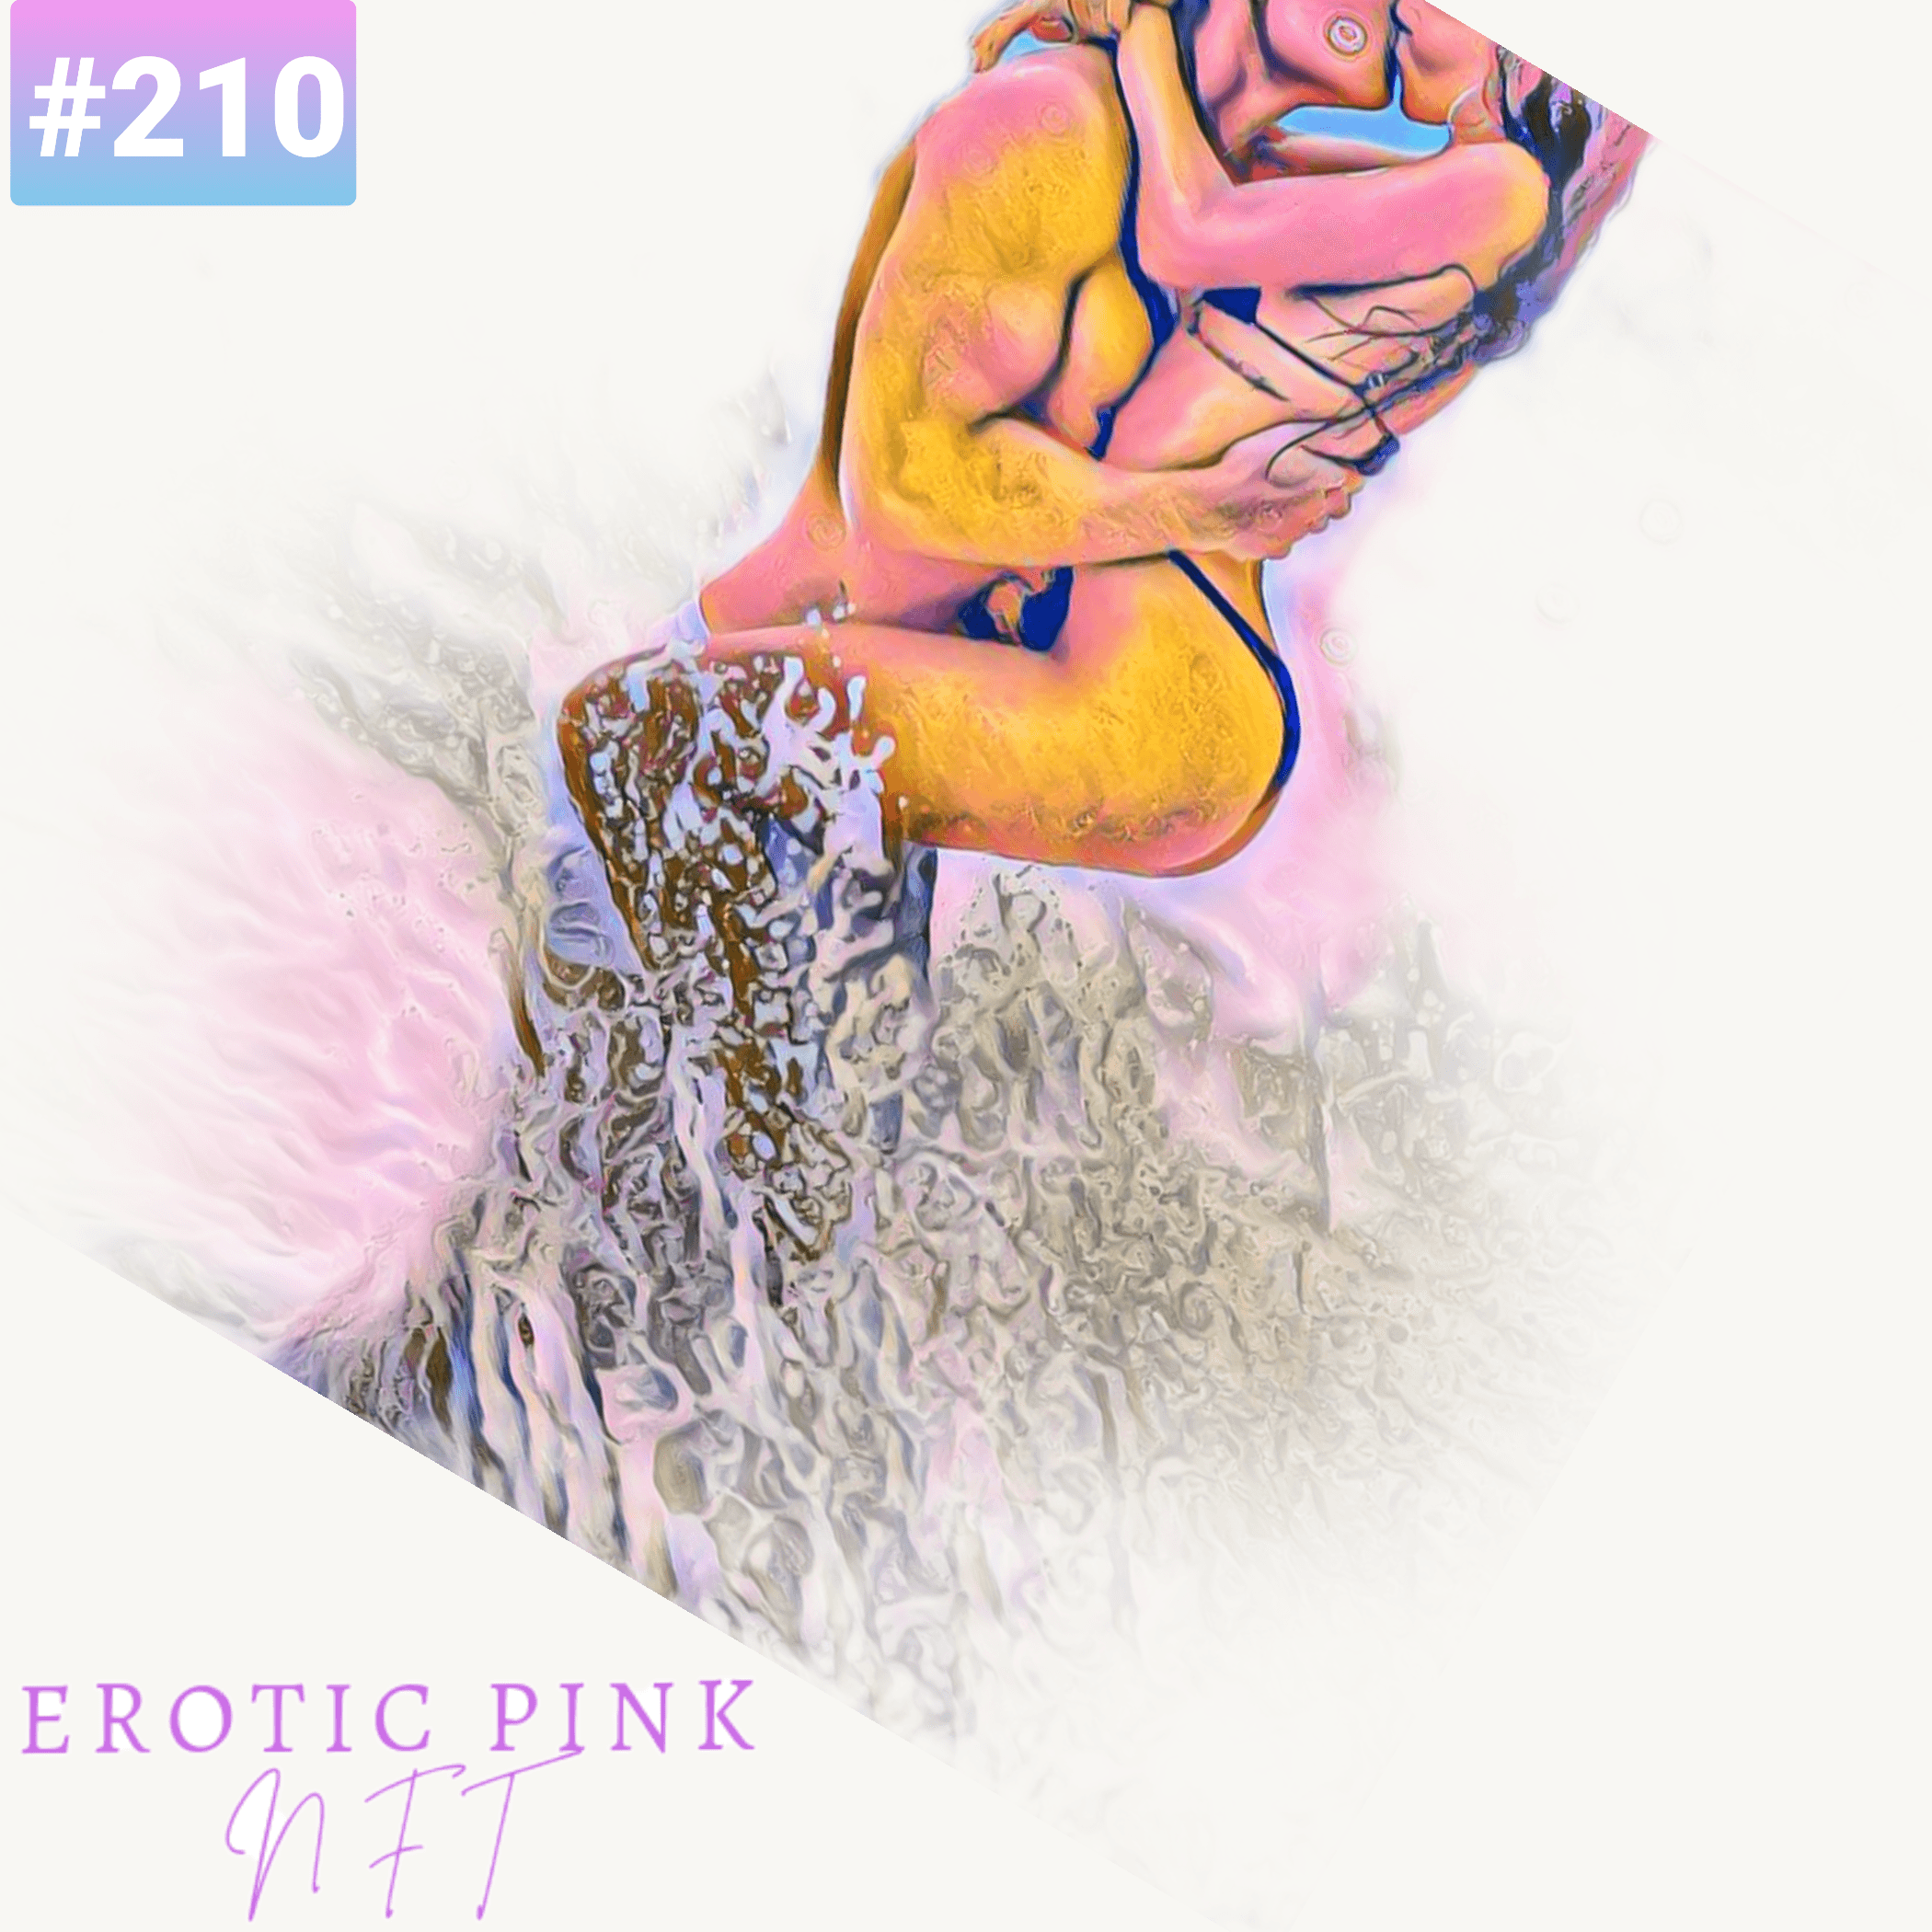 Erotic Pink #210